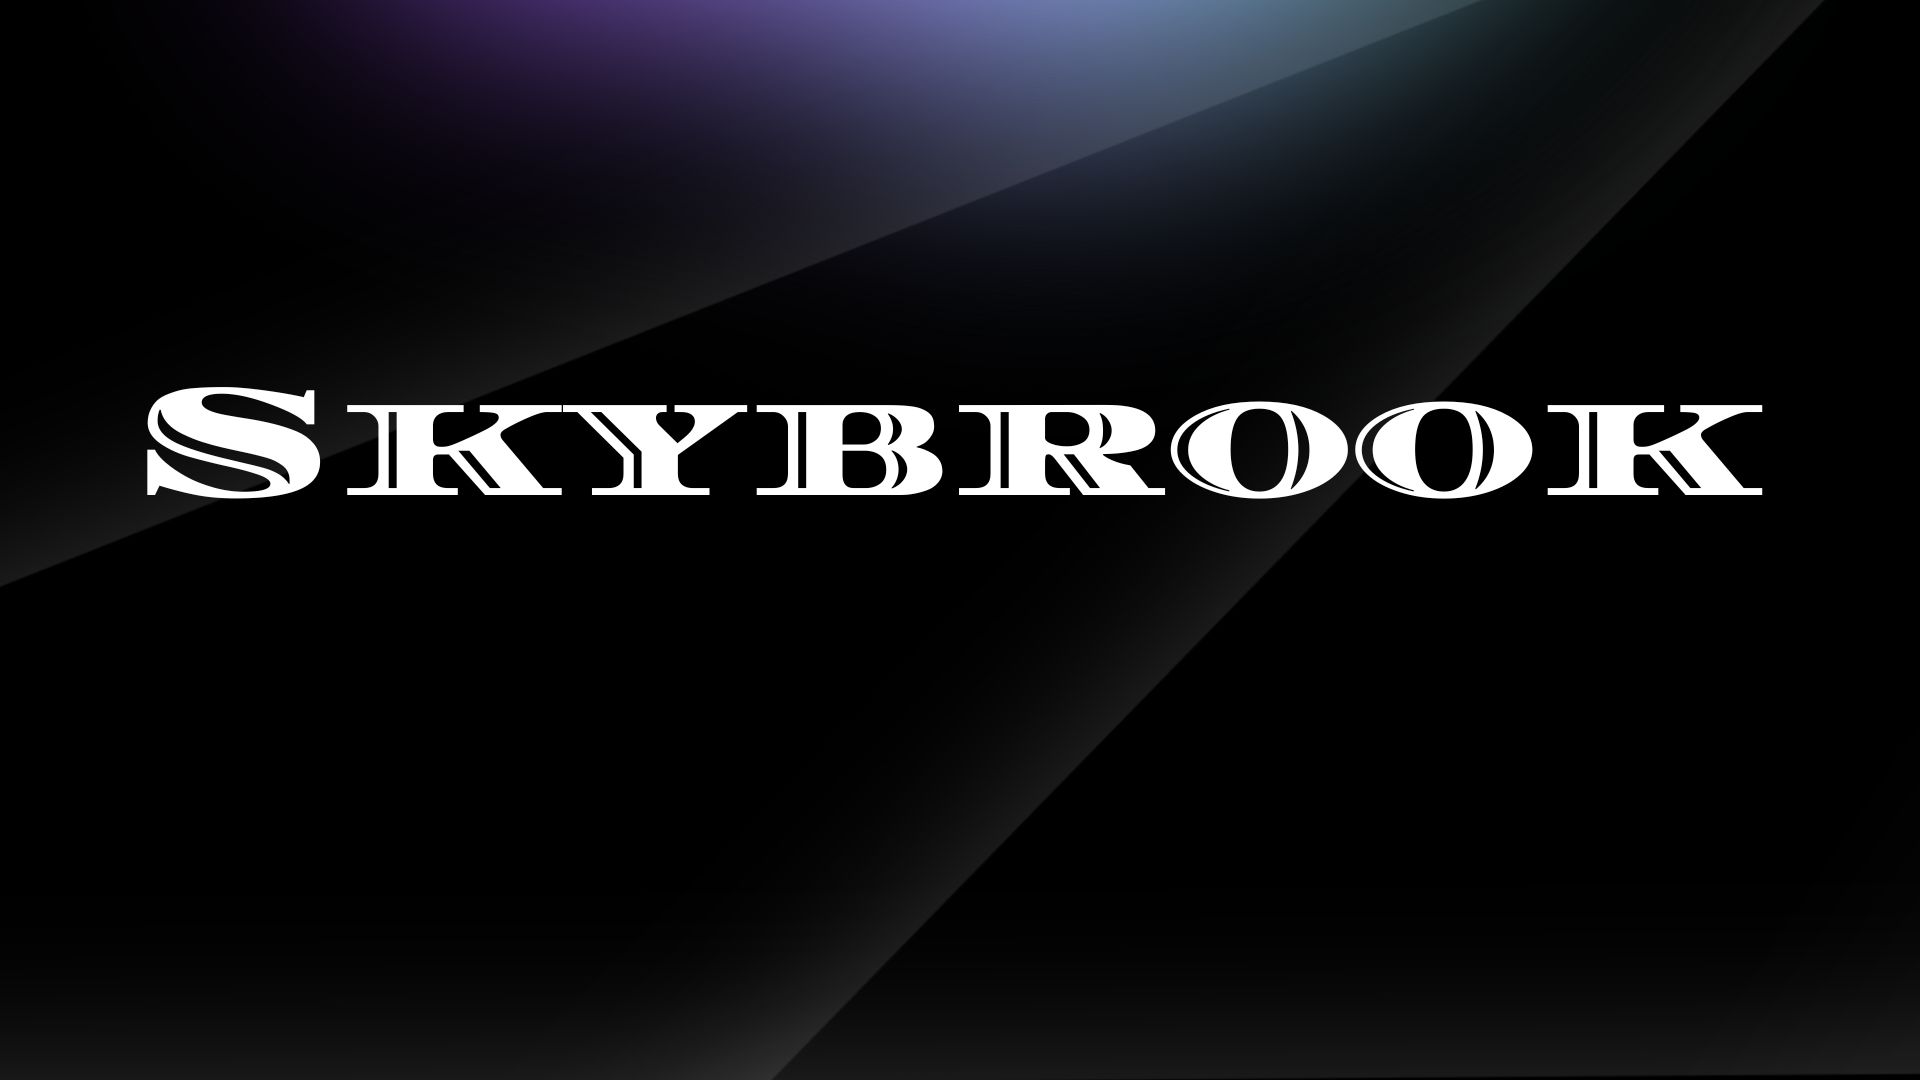 Skybrook #438/1000